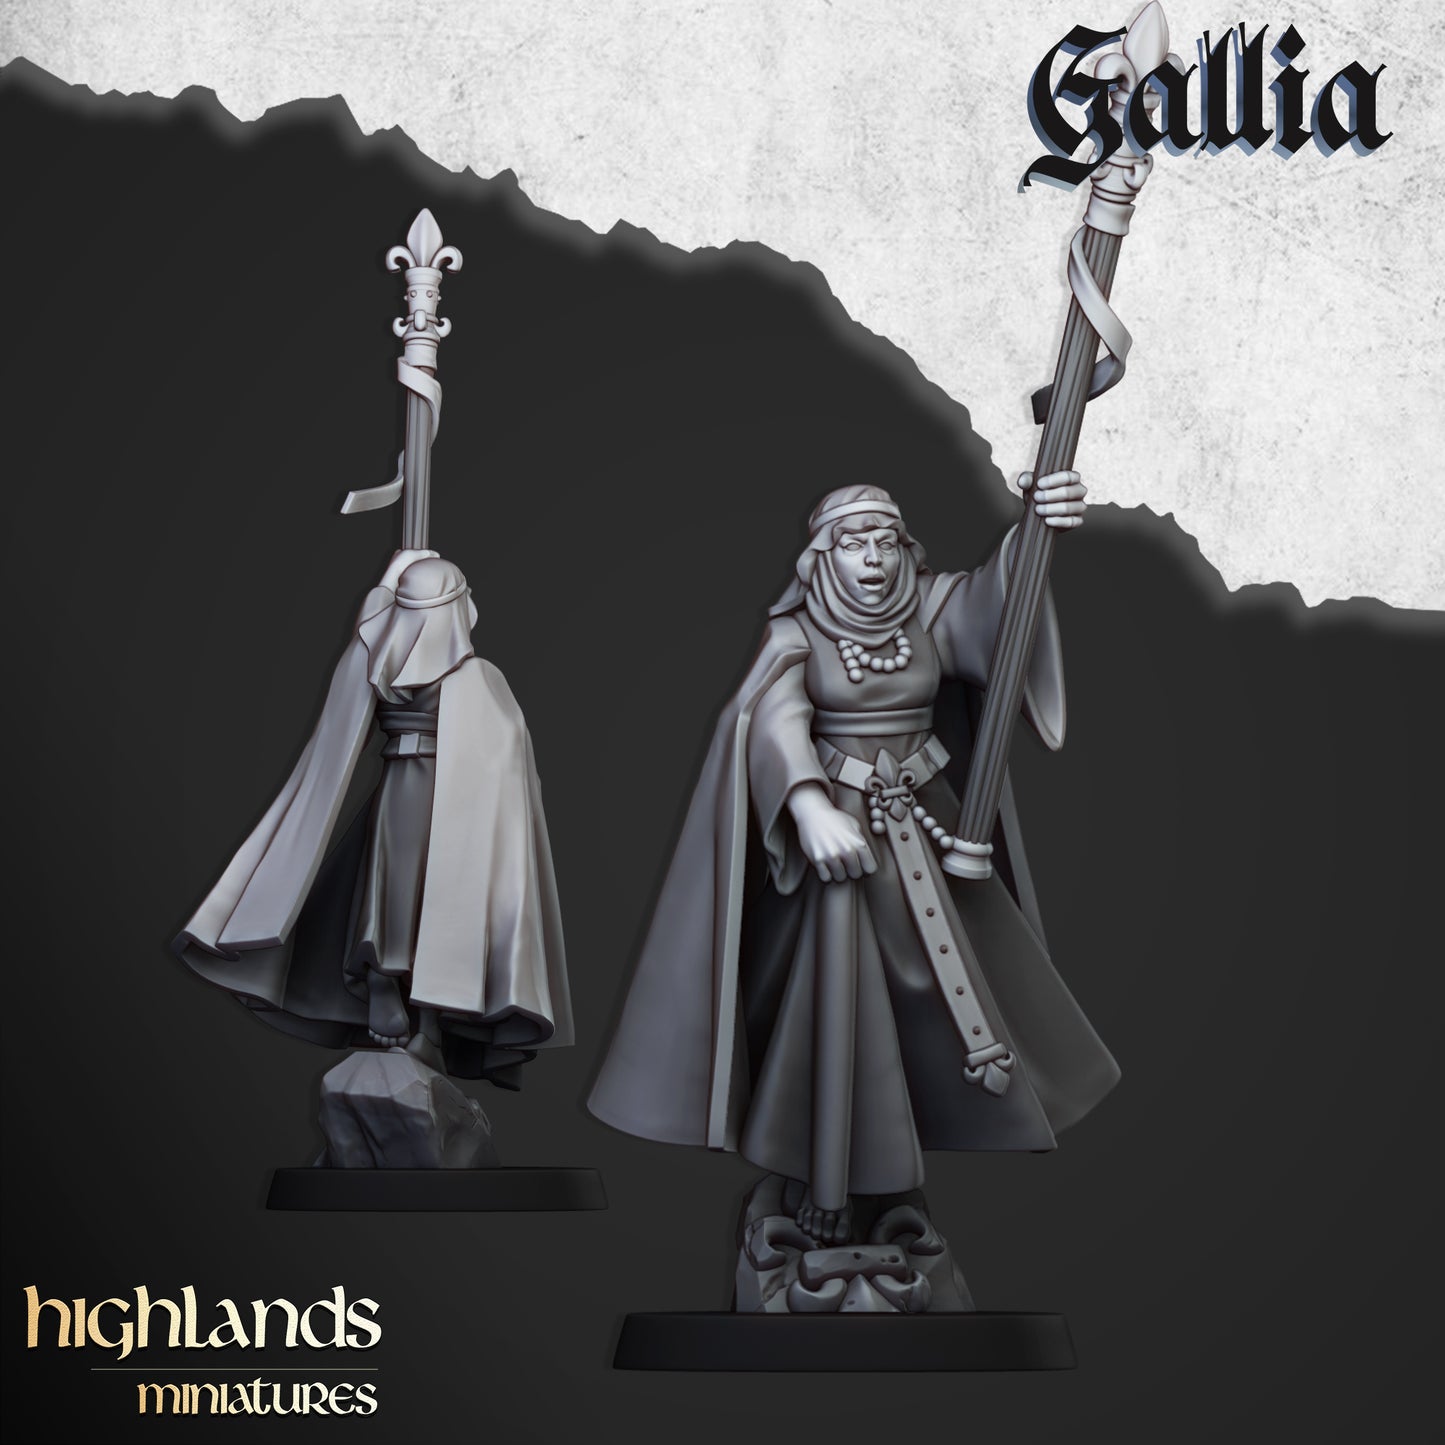 Gallia Damsel from Highlands Miniatures